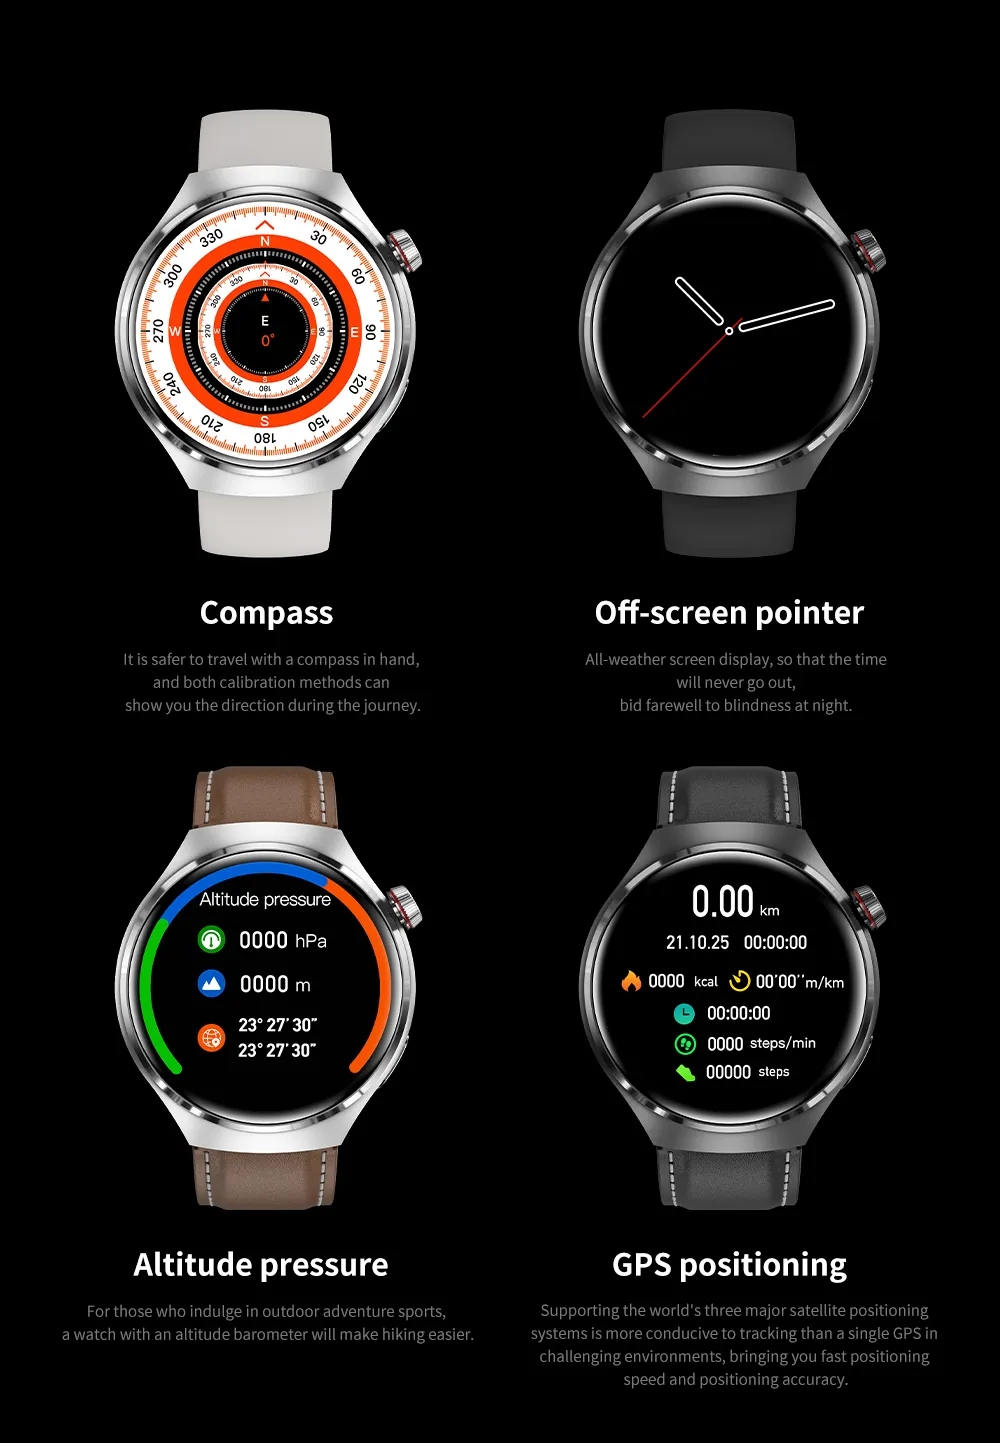 For Huawei GT4 PRO Smart Watch Men Watch 4 Pro AMOLED HD Screen Bluetooth Call GPS NFC Heart rate BloodSugar SmartWatch 2023 New